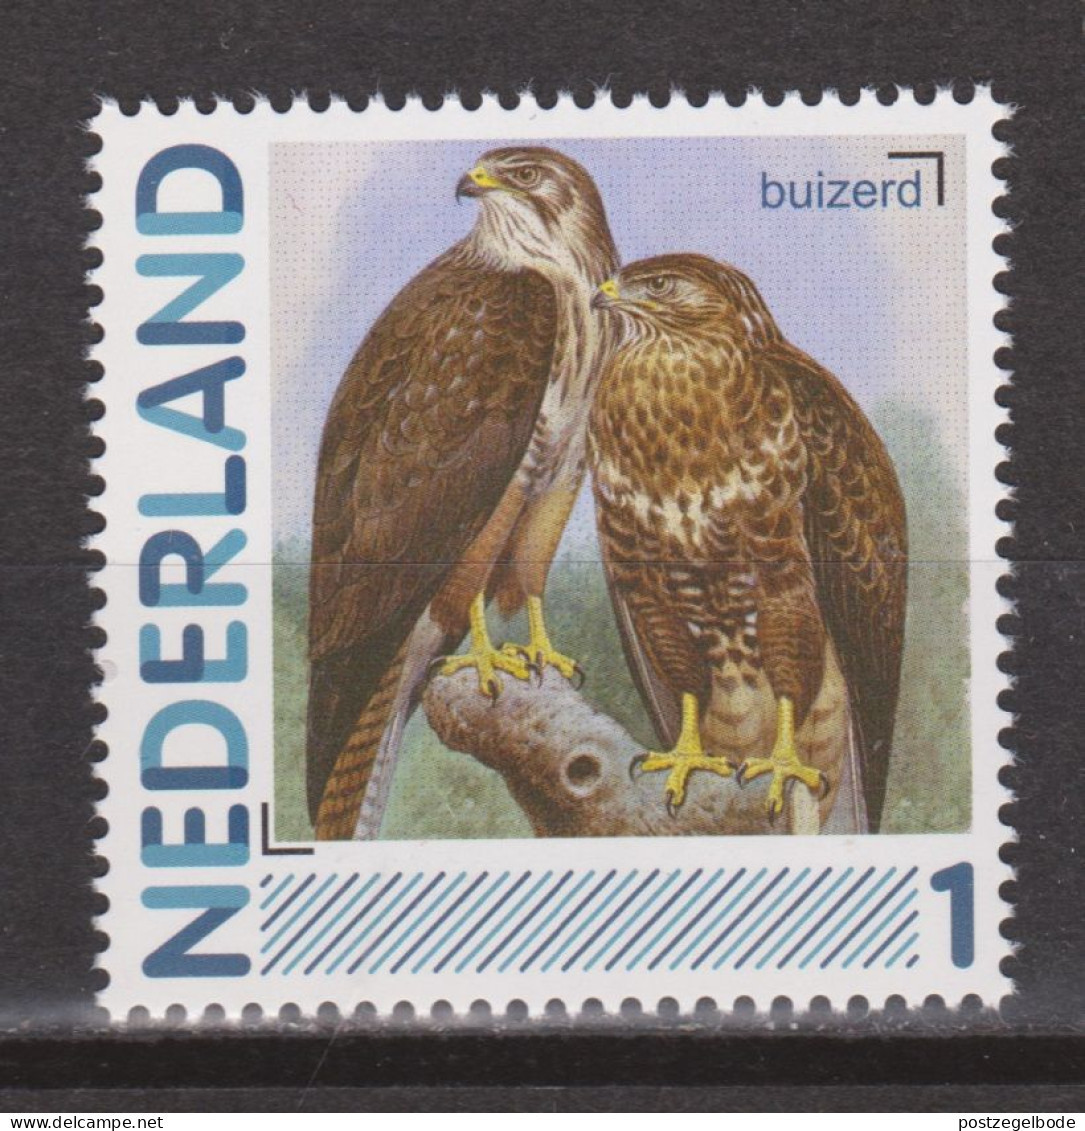 Nederland Netherlands Pays Bas MNH Roofvogel Oiseau De Proie Ave De Rapina Bird Of Prey Buizerd Buzzard Buse Ratonero - Aquile & Rapaci Diurni